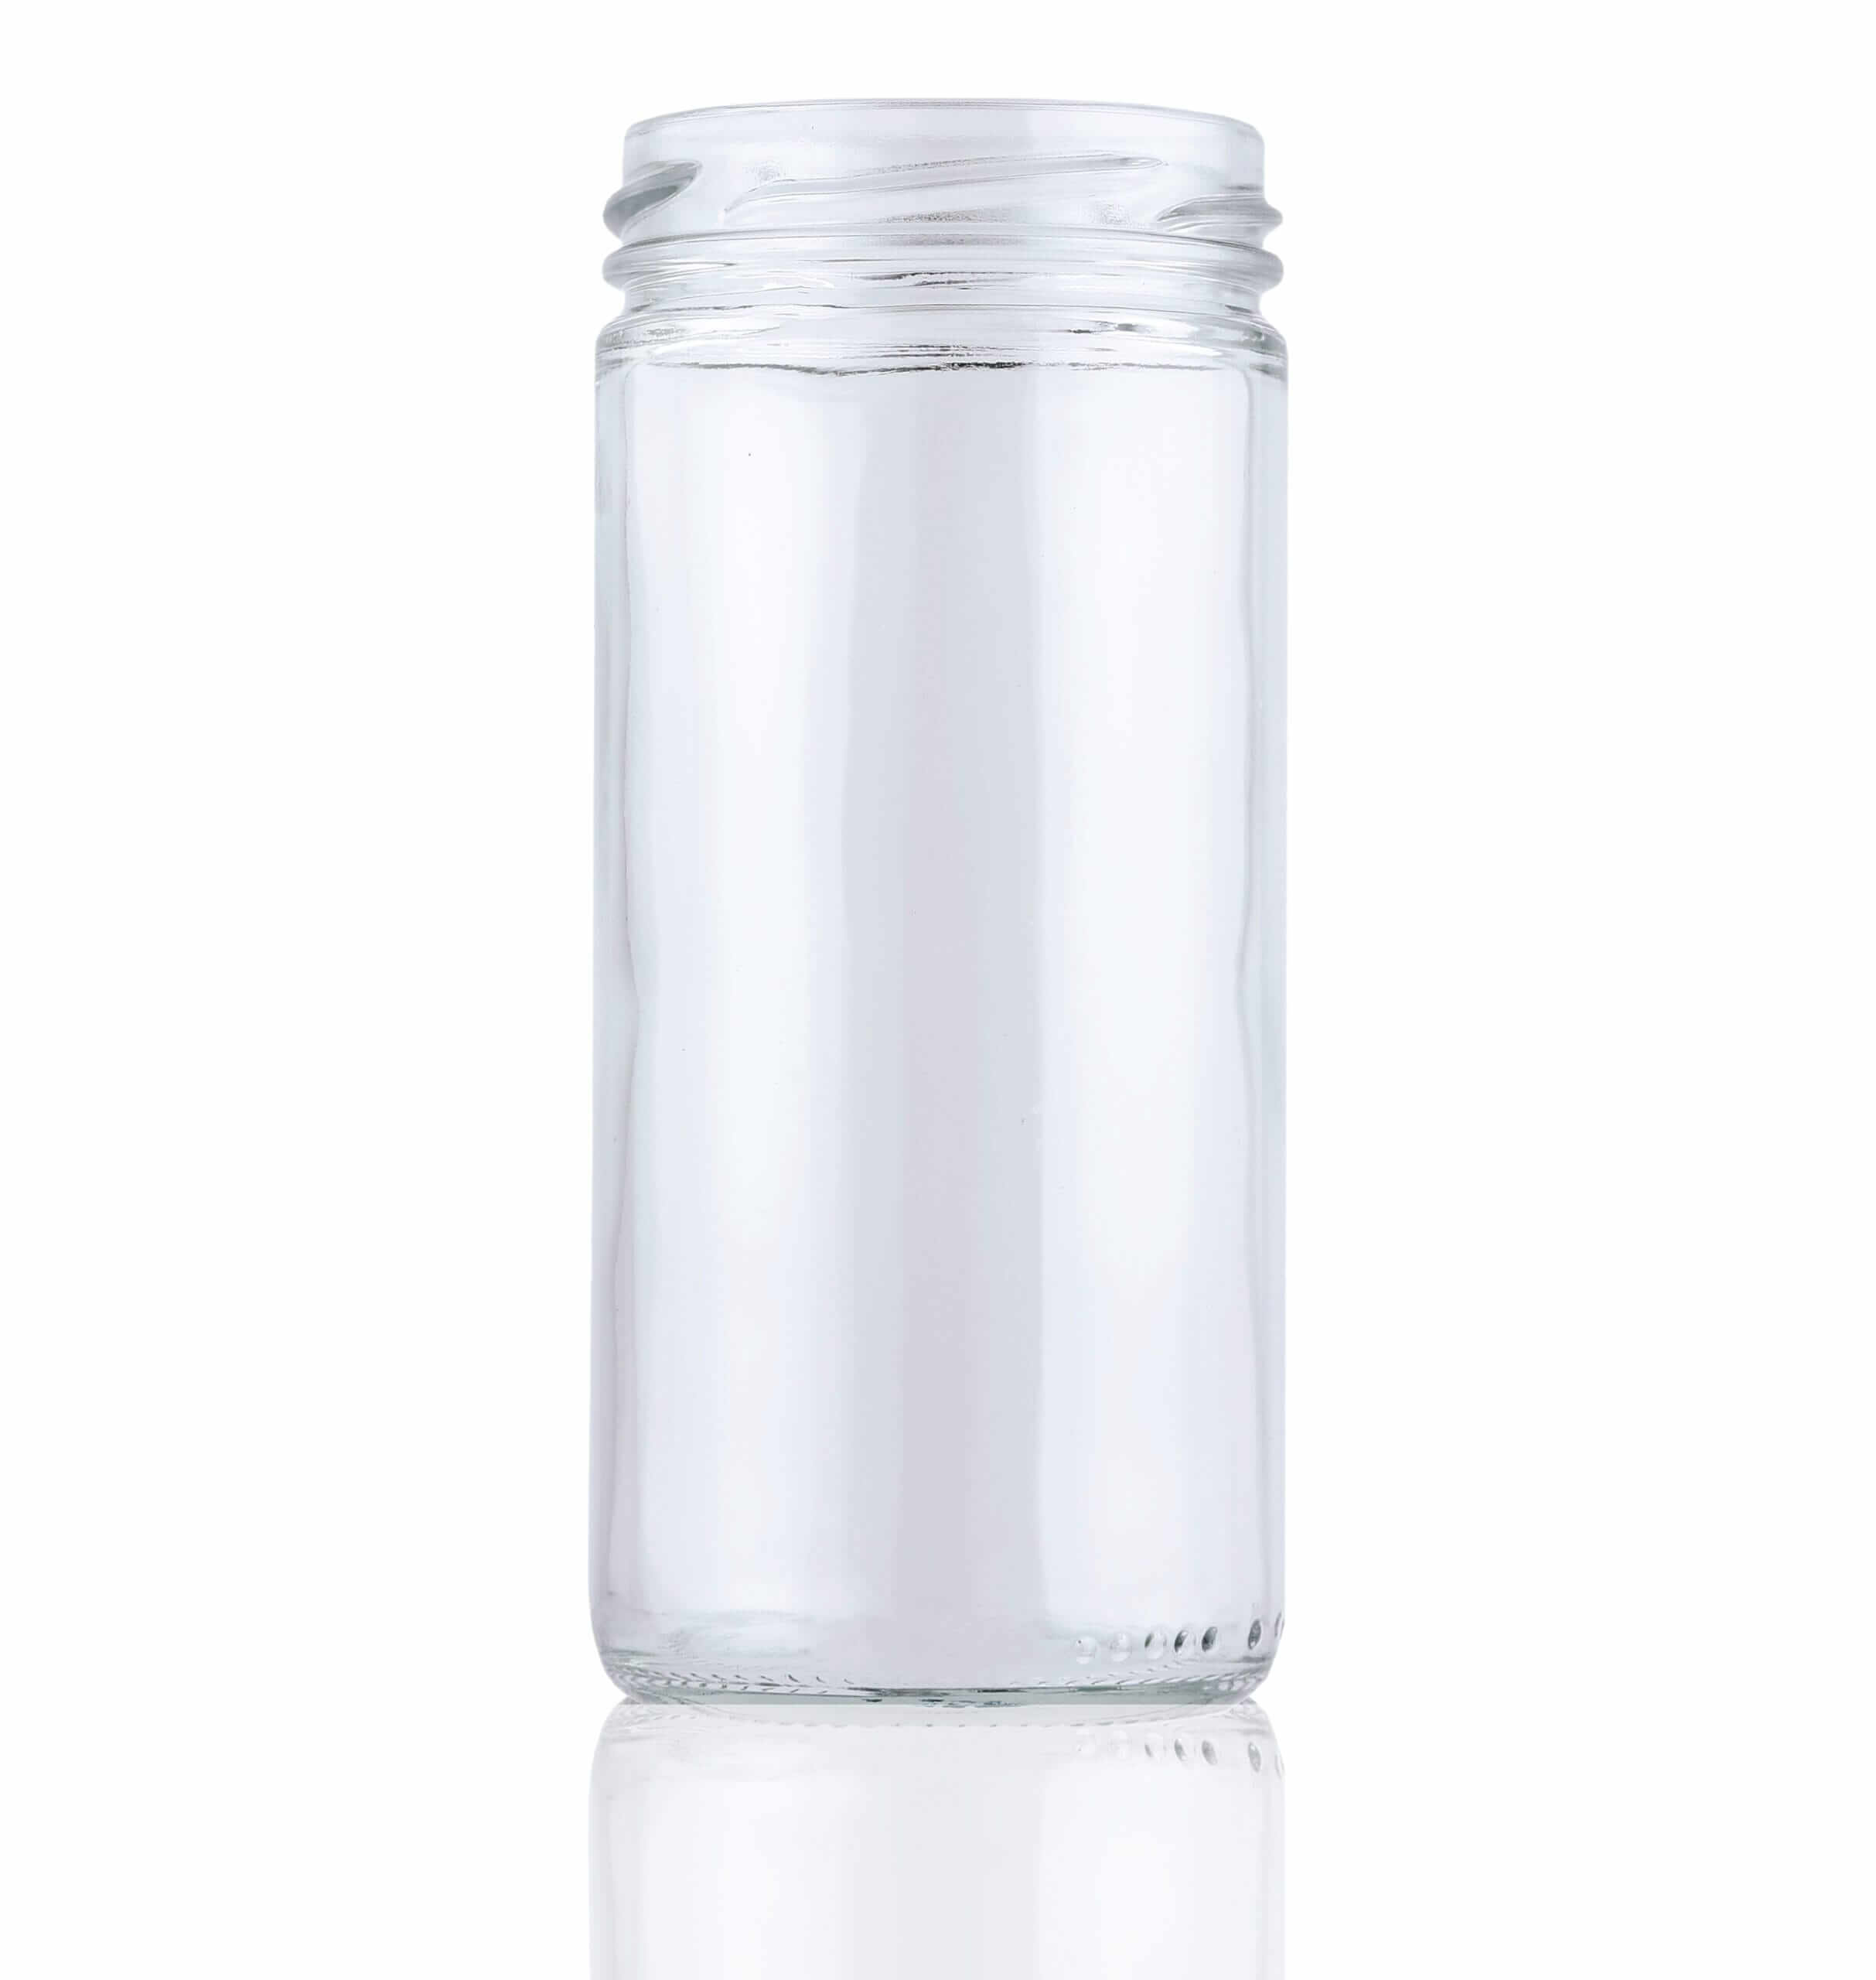 https://www.clsmith.com/wp-content/uploads/2021/06/Paragon-Glass-Jar-1-scaled.jpg